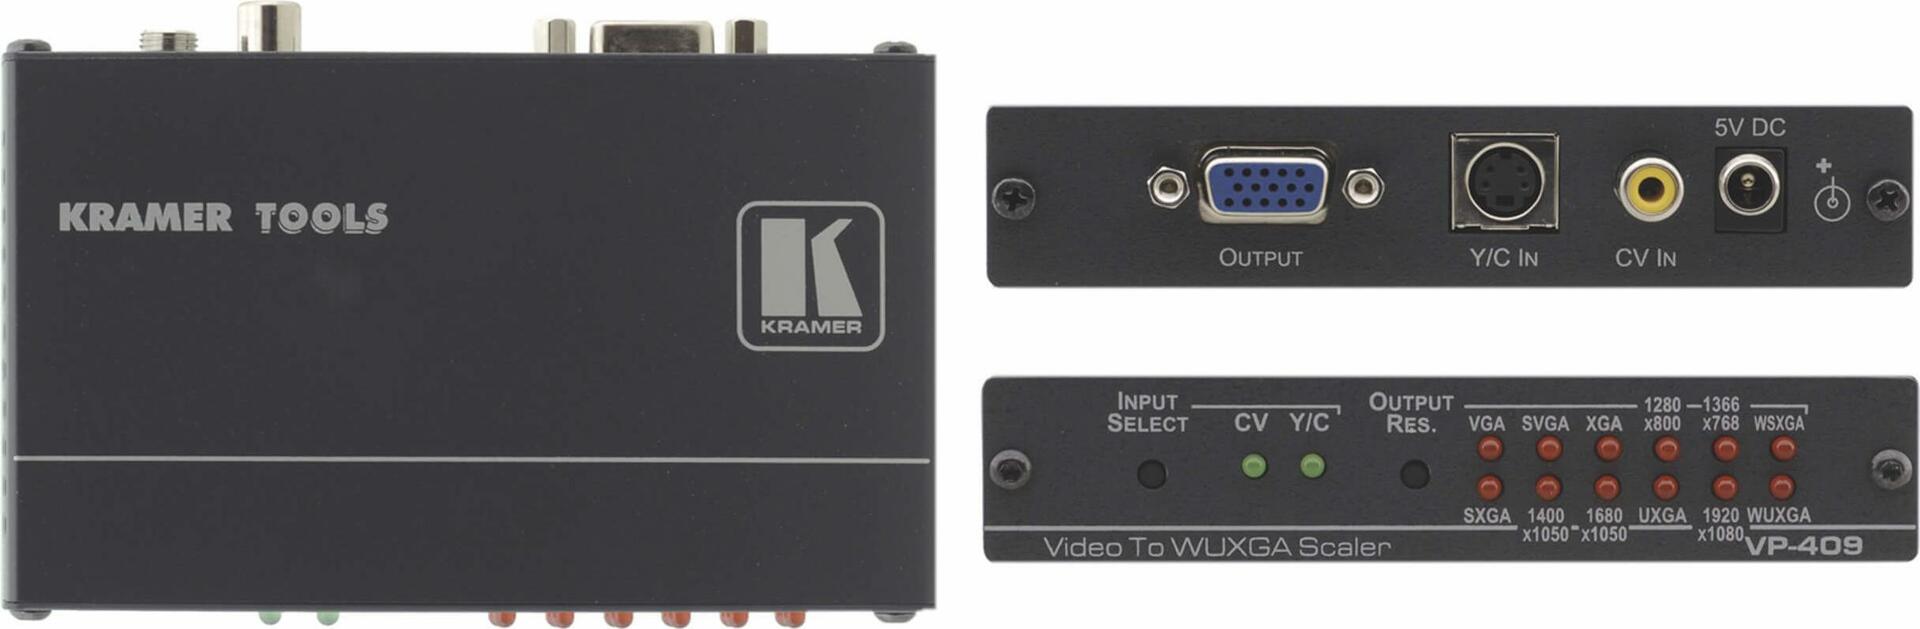 Video s-Video zu WUXGA Digital-Scaler VP-409 (70-70409090)